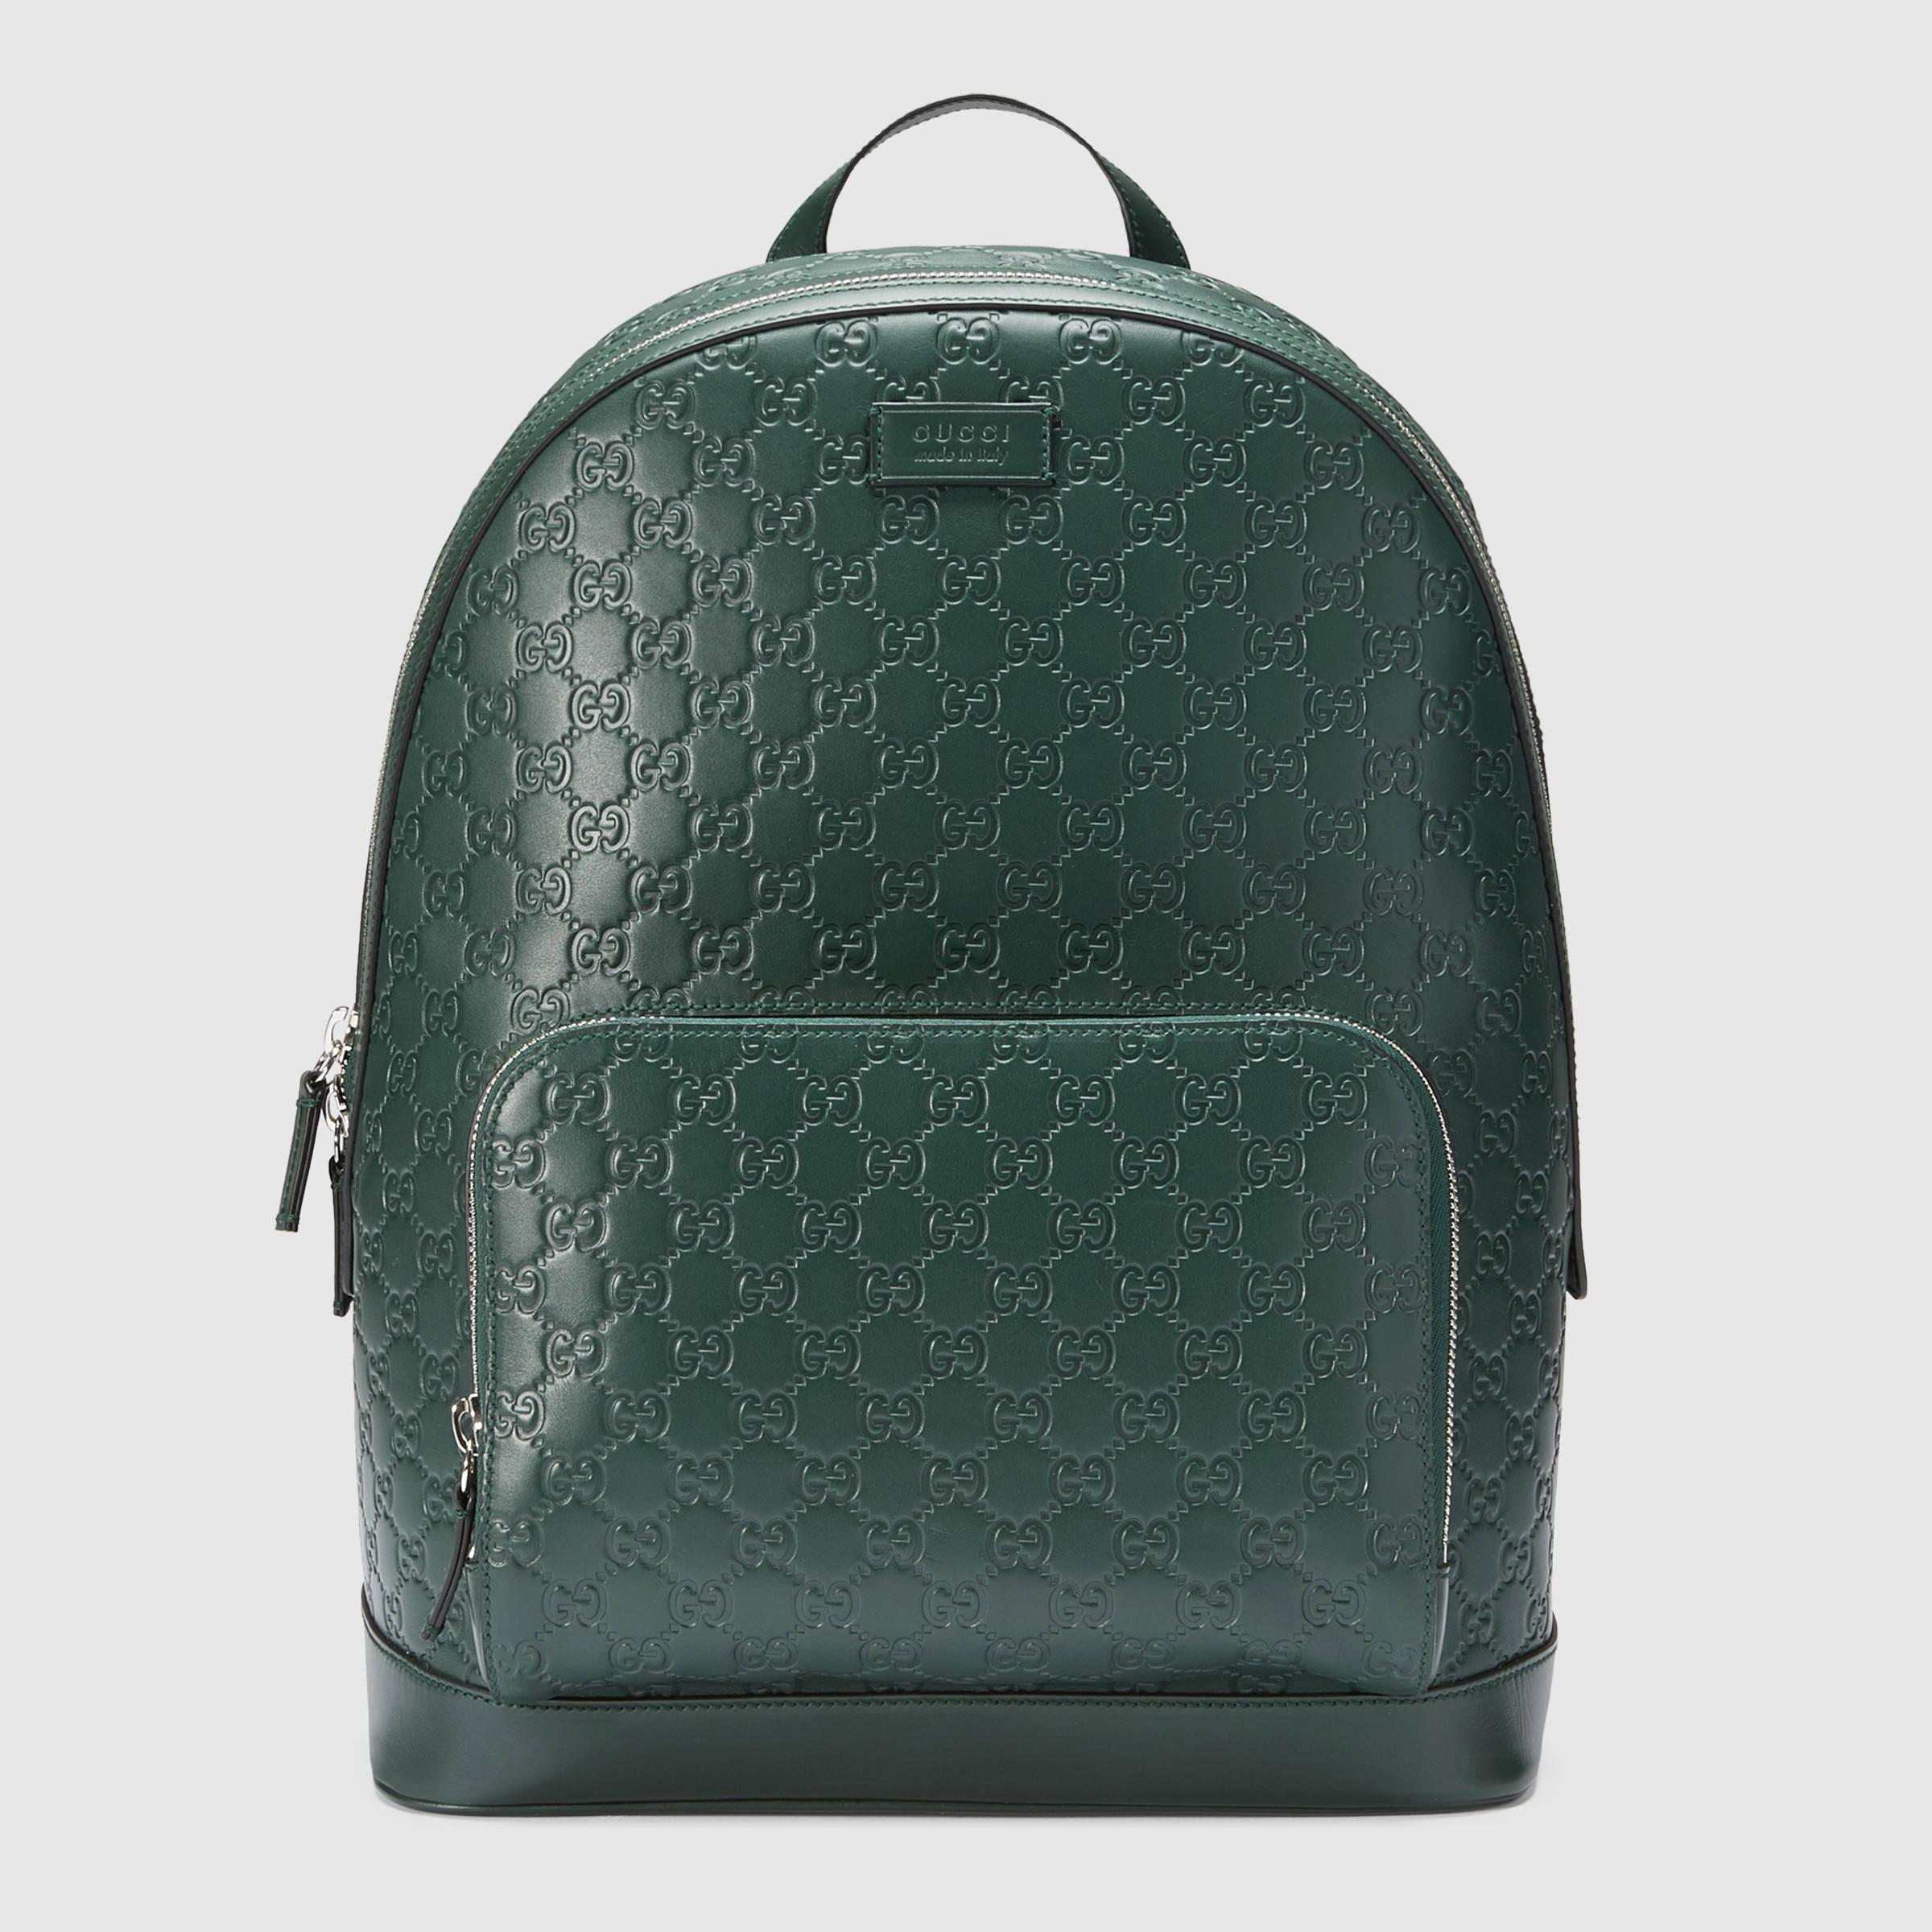 gucci backpack green